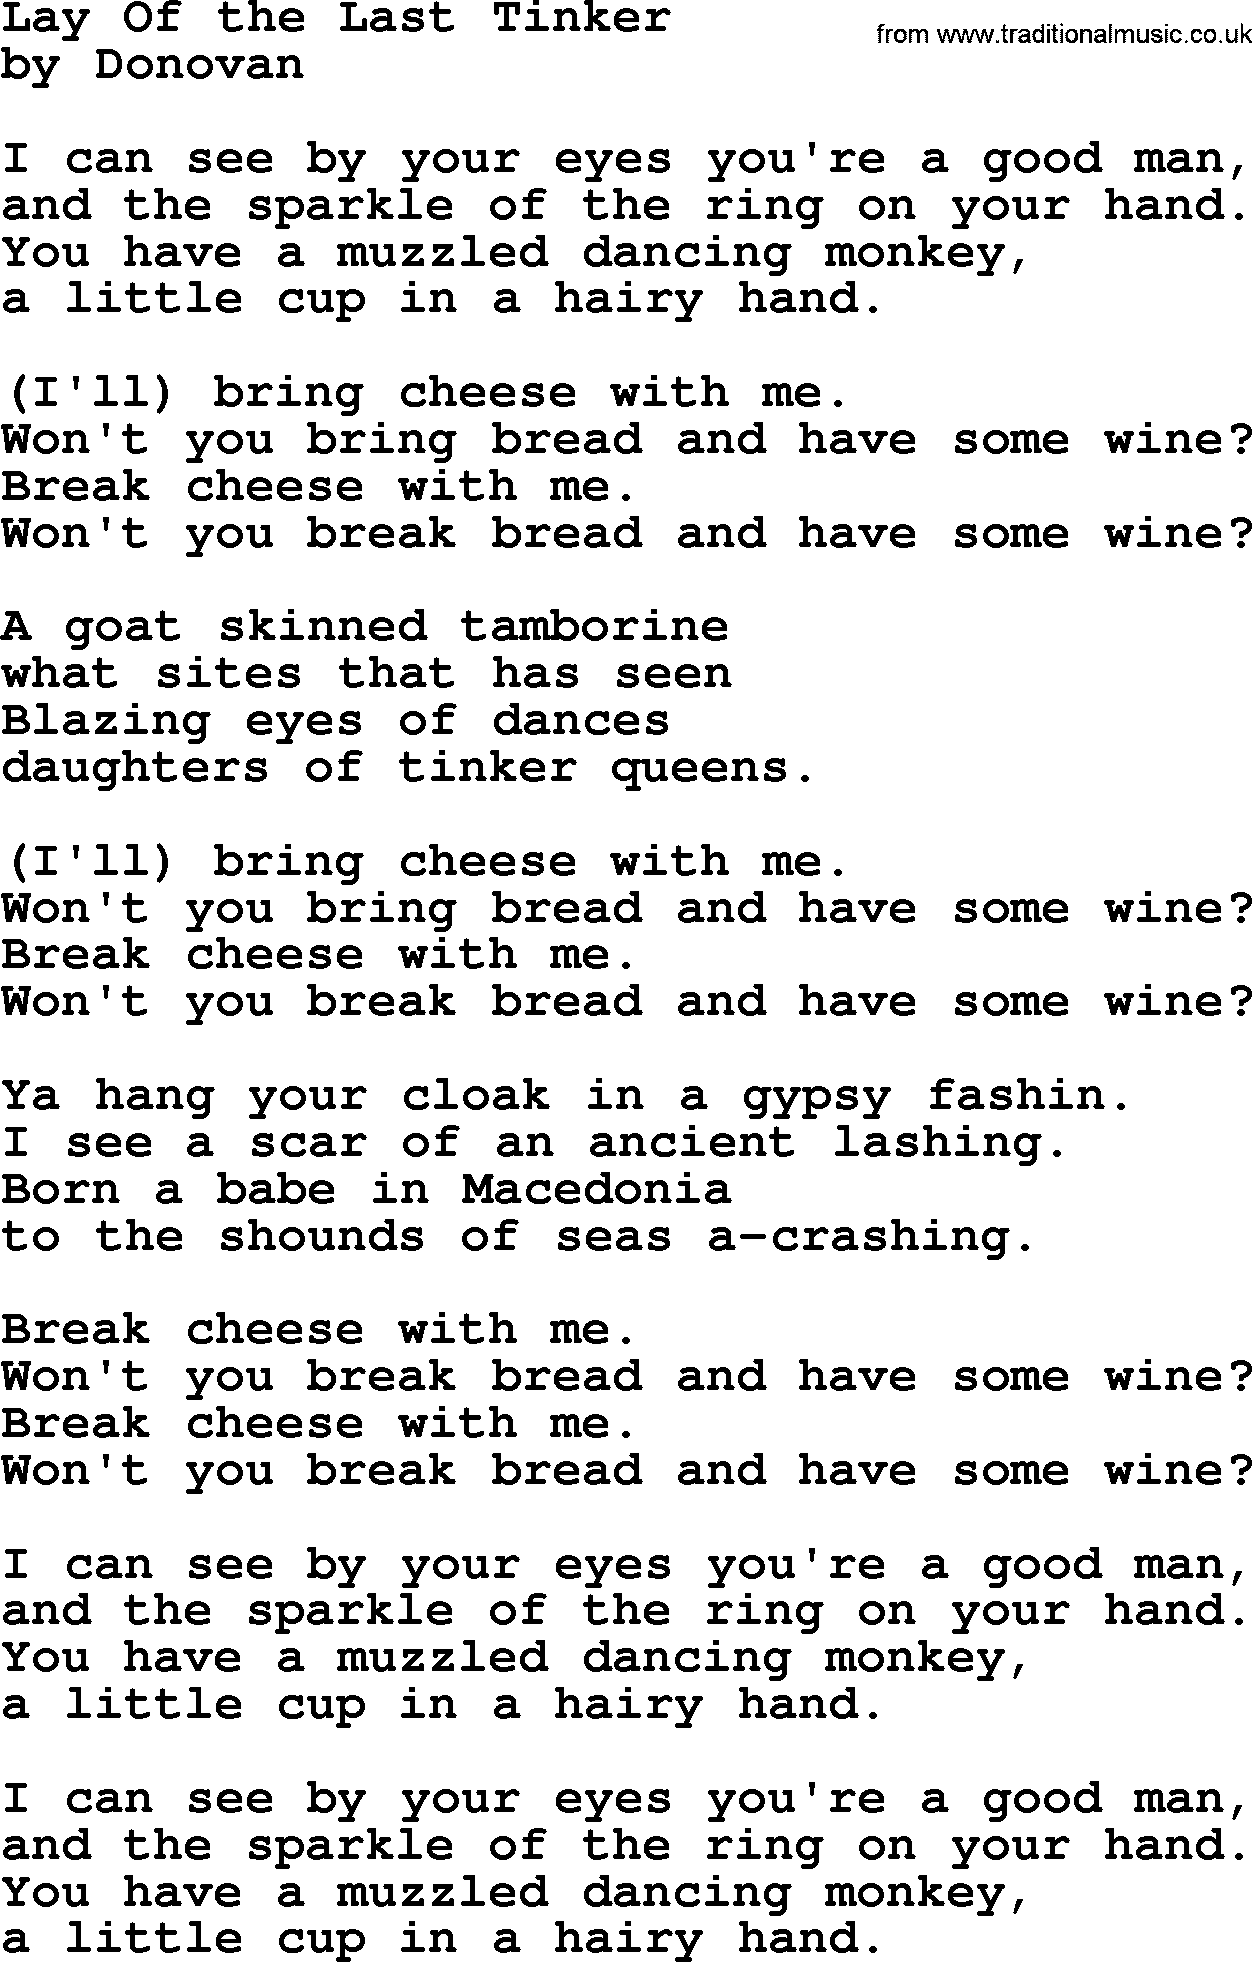 Donovan Leitch song: Lay Of The Last Tinker lyrics